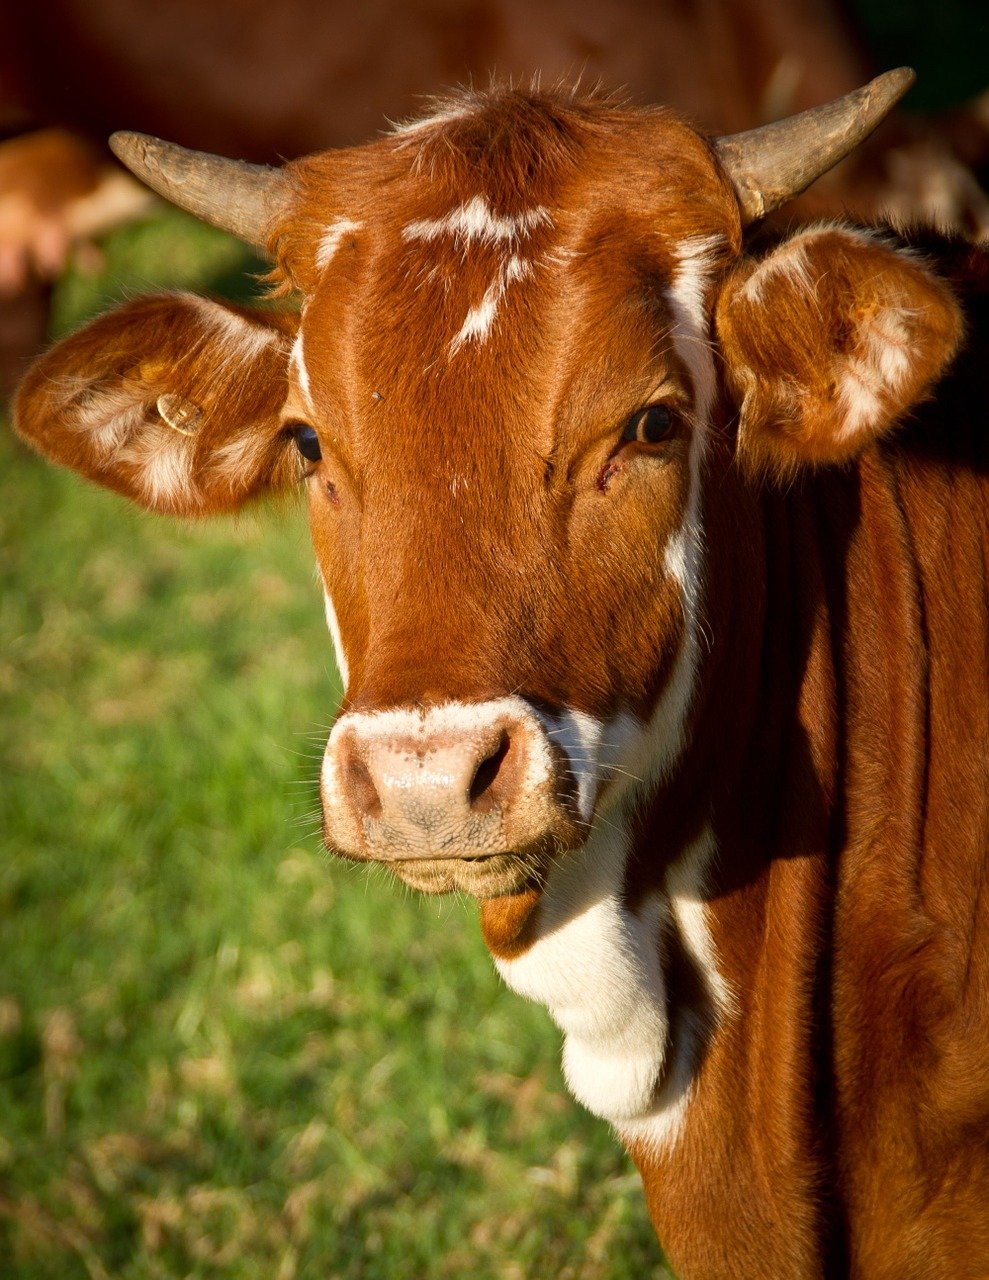 Cow in a farm | Photo: Pixabay